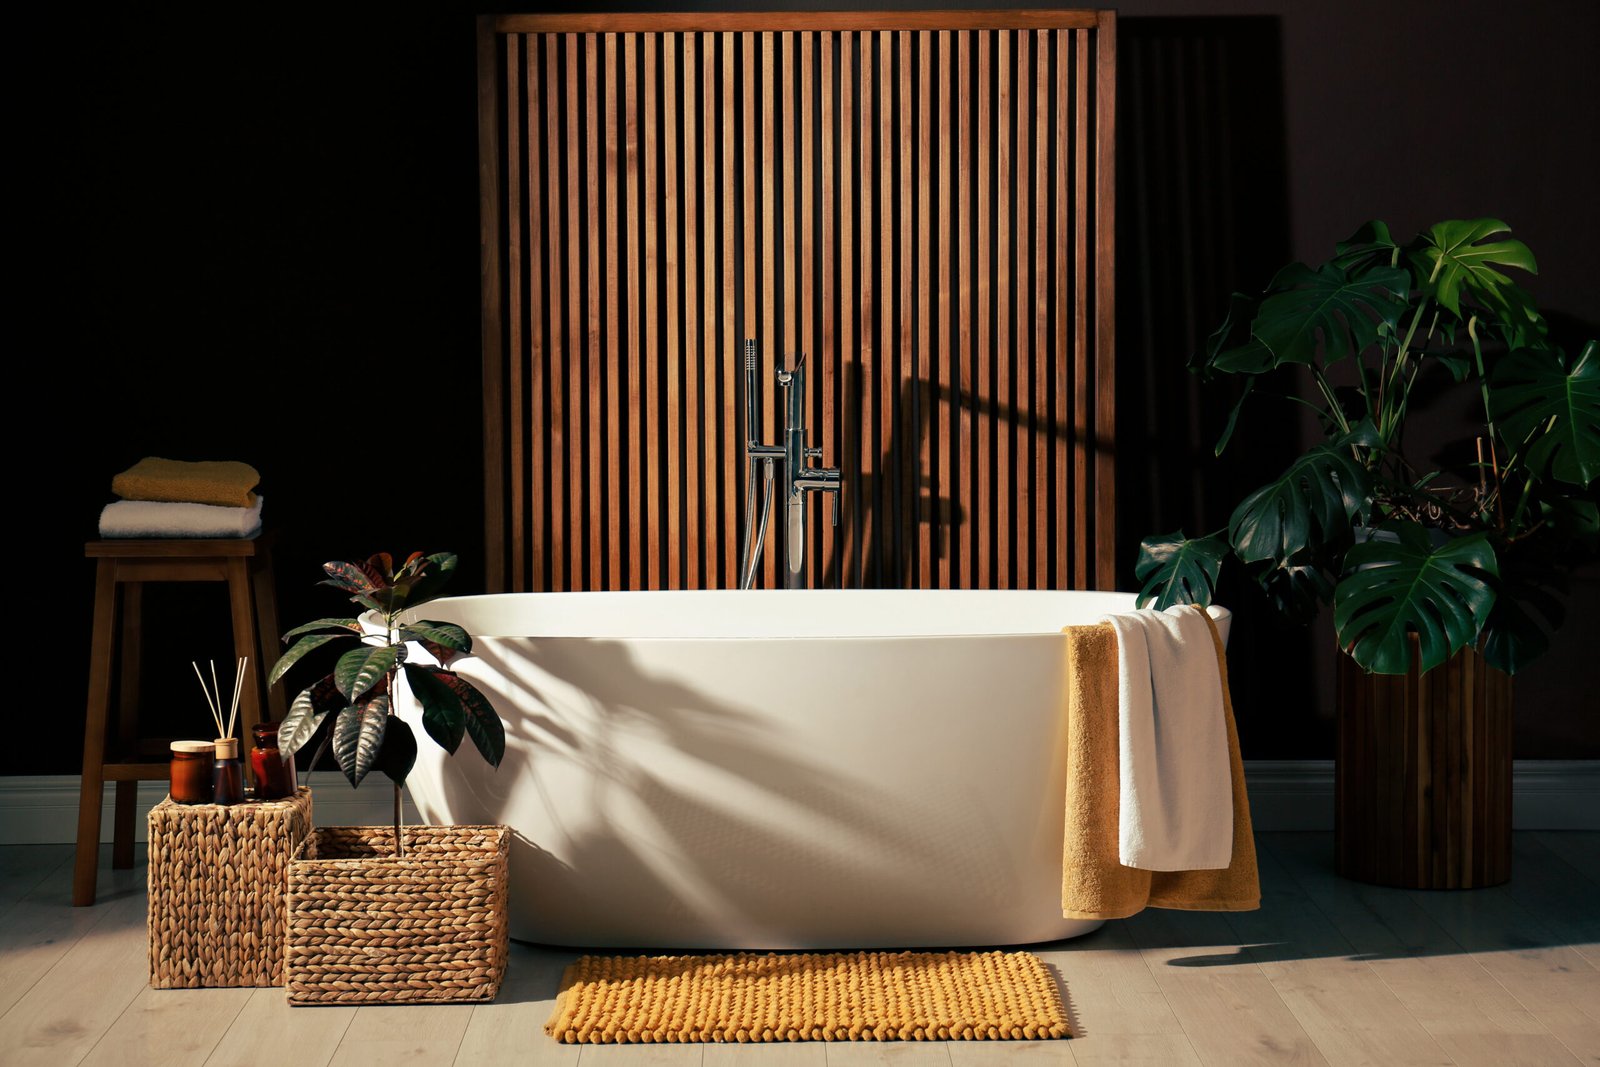 Cozy bathroom interior with stylish ceramic tub. 